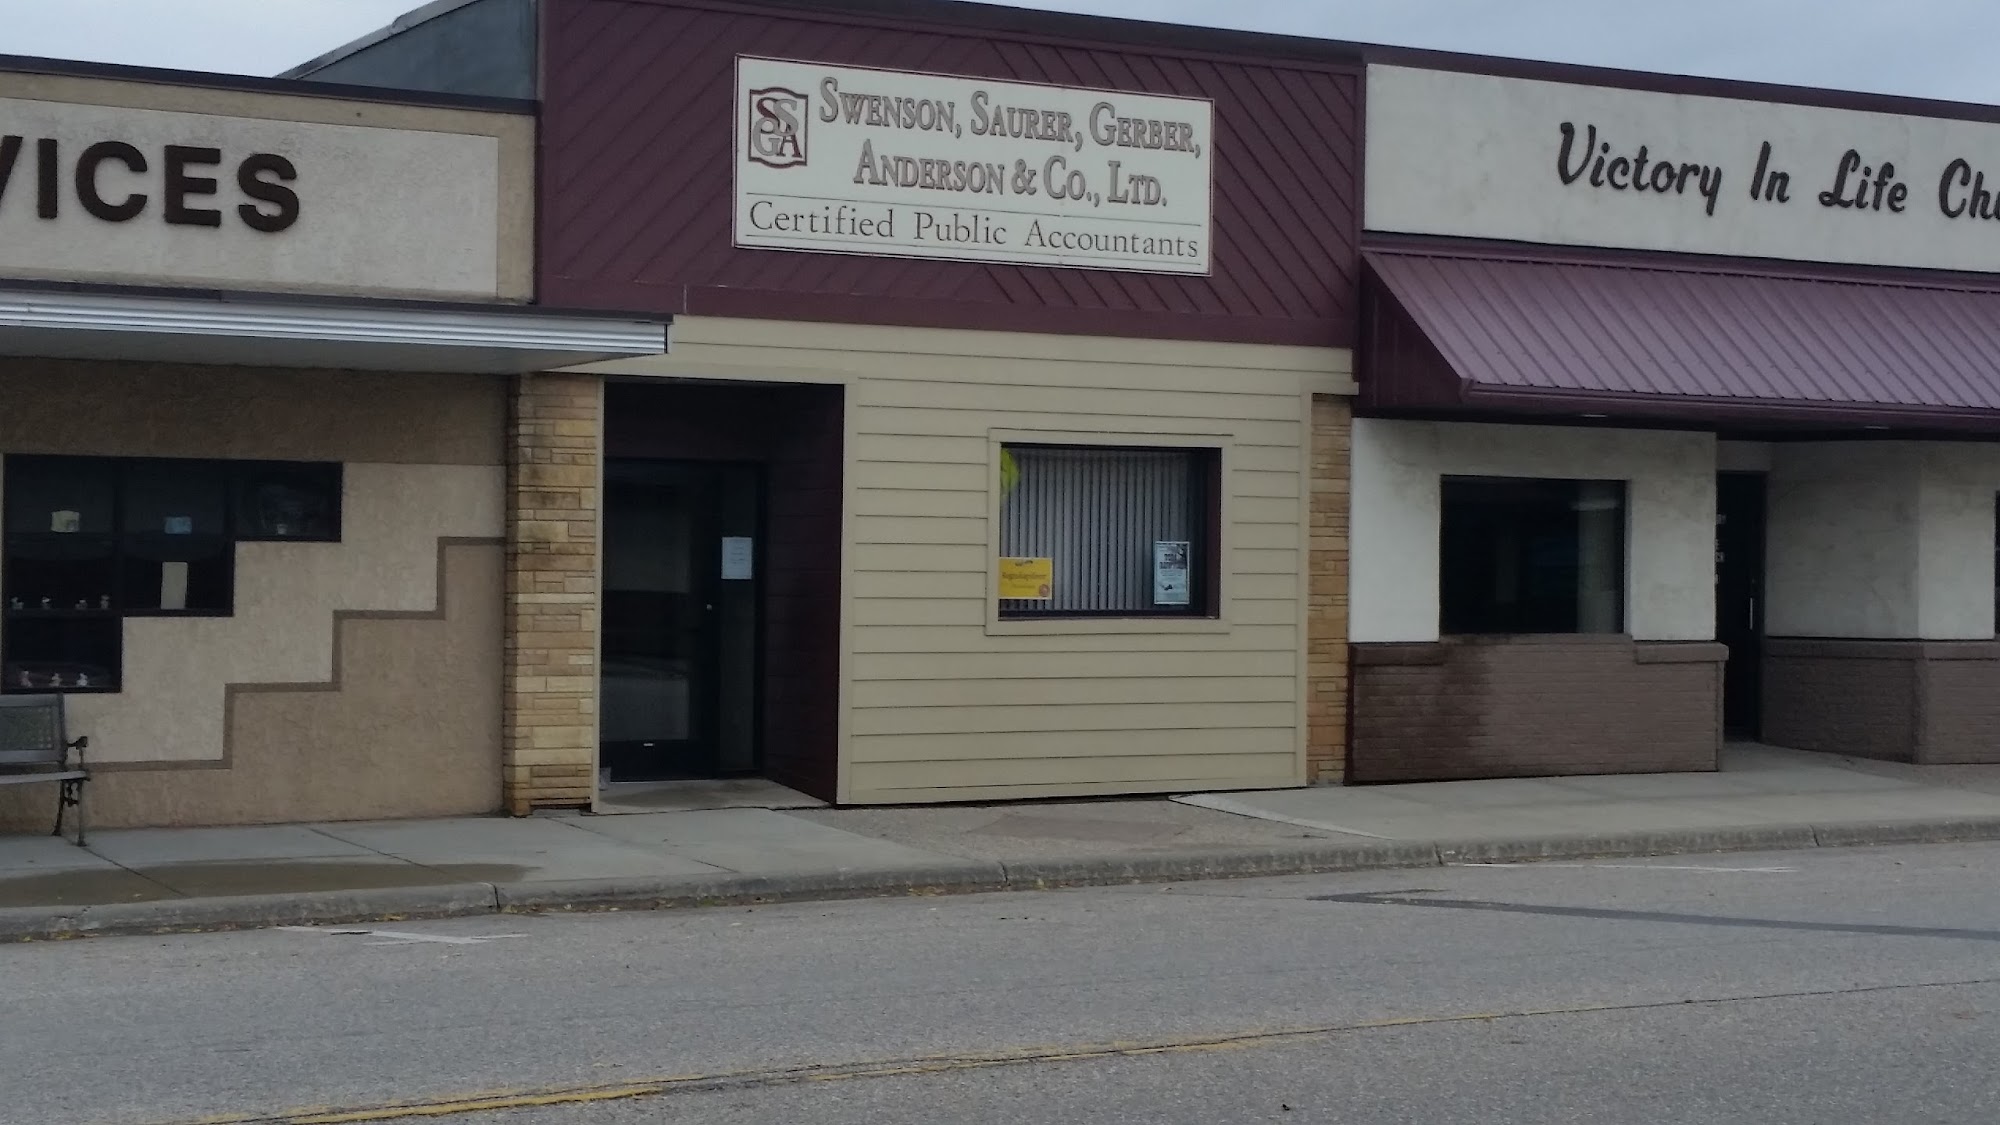 Swenson, Saurer, Gerber, Anderson & Co., Ltd. 26 Central Ave, Elbow Lake Minnesota 56531